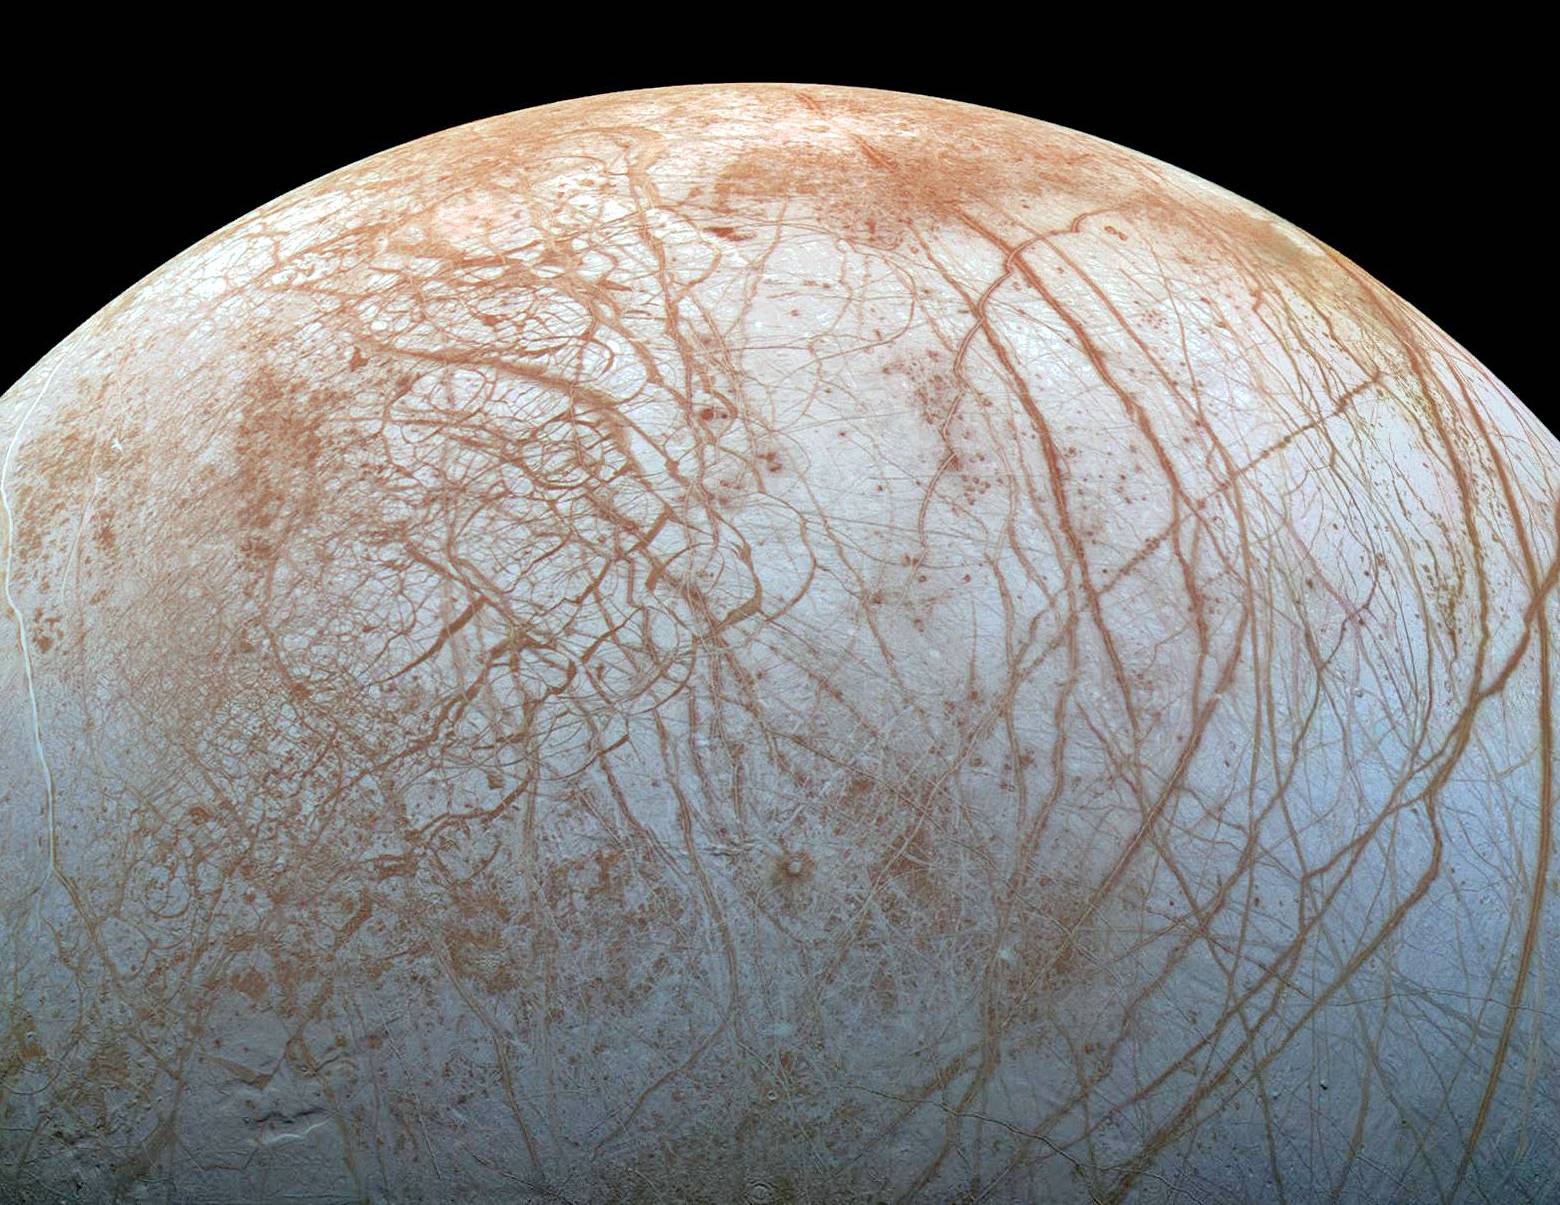 Jupiter's moons keep each other warm - BGR

